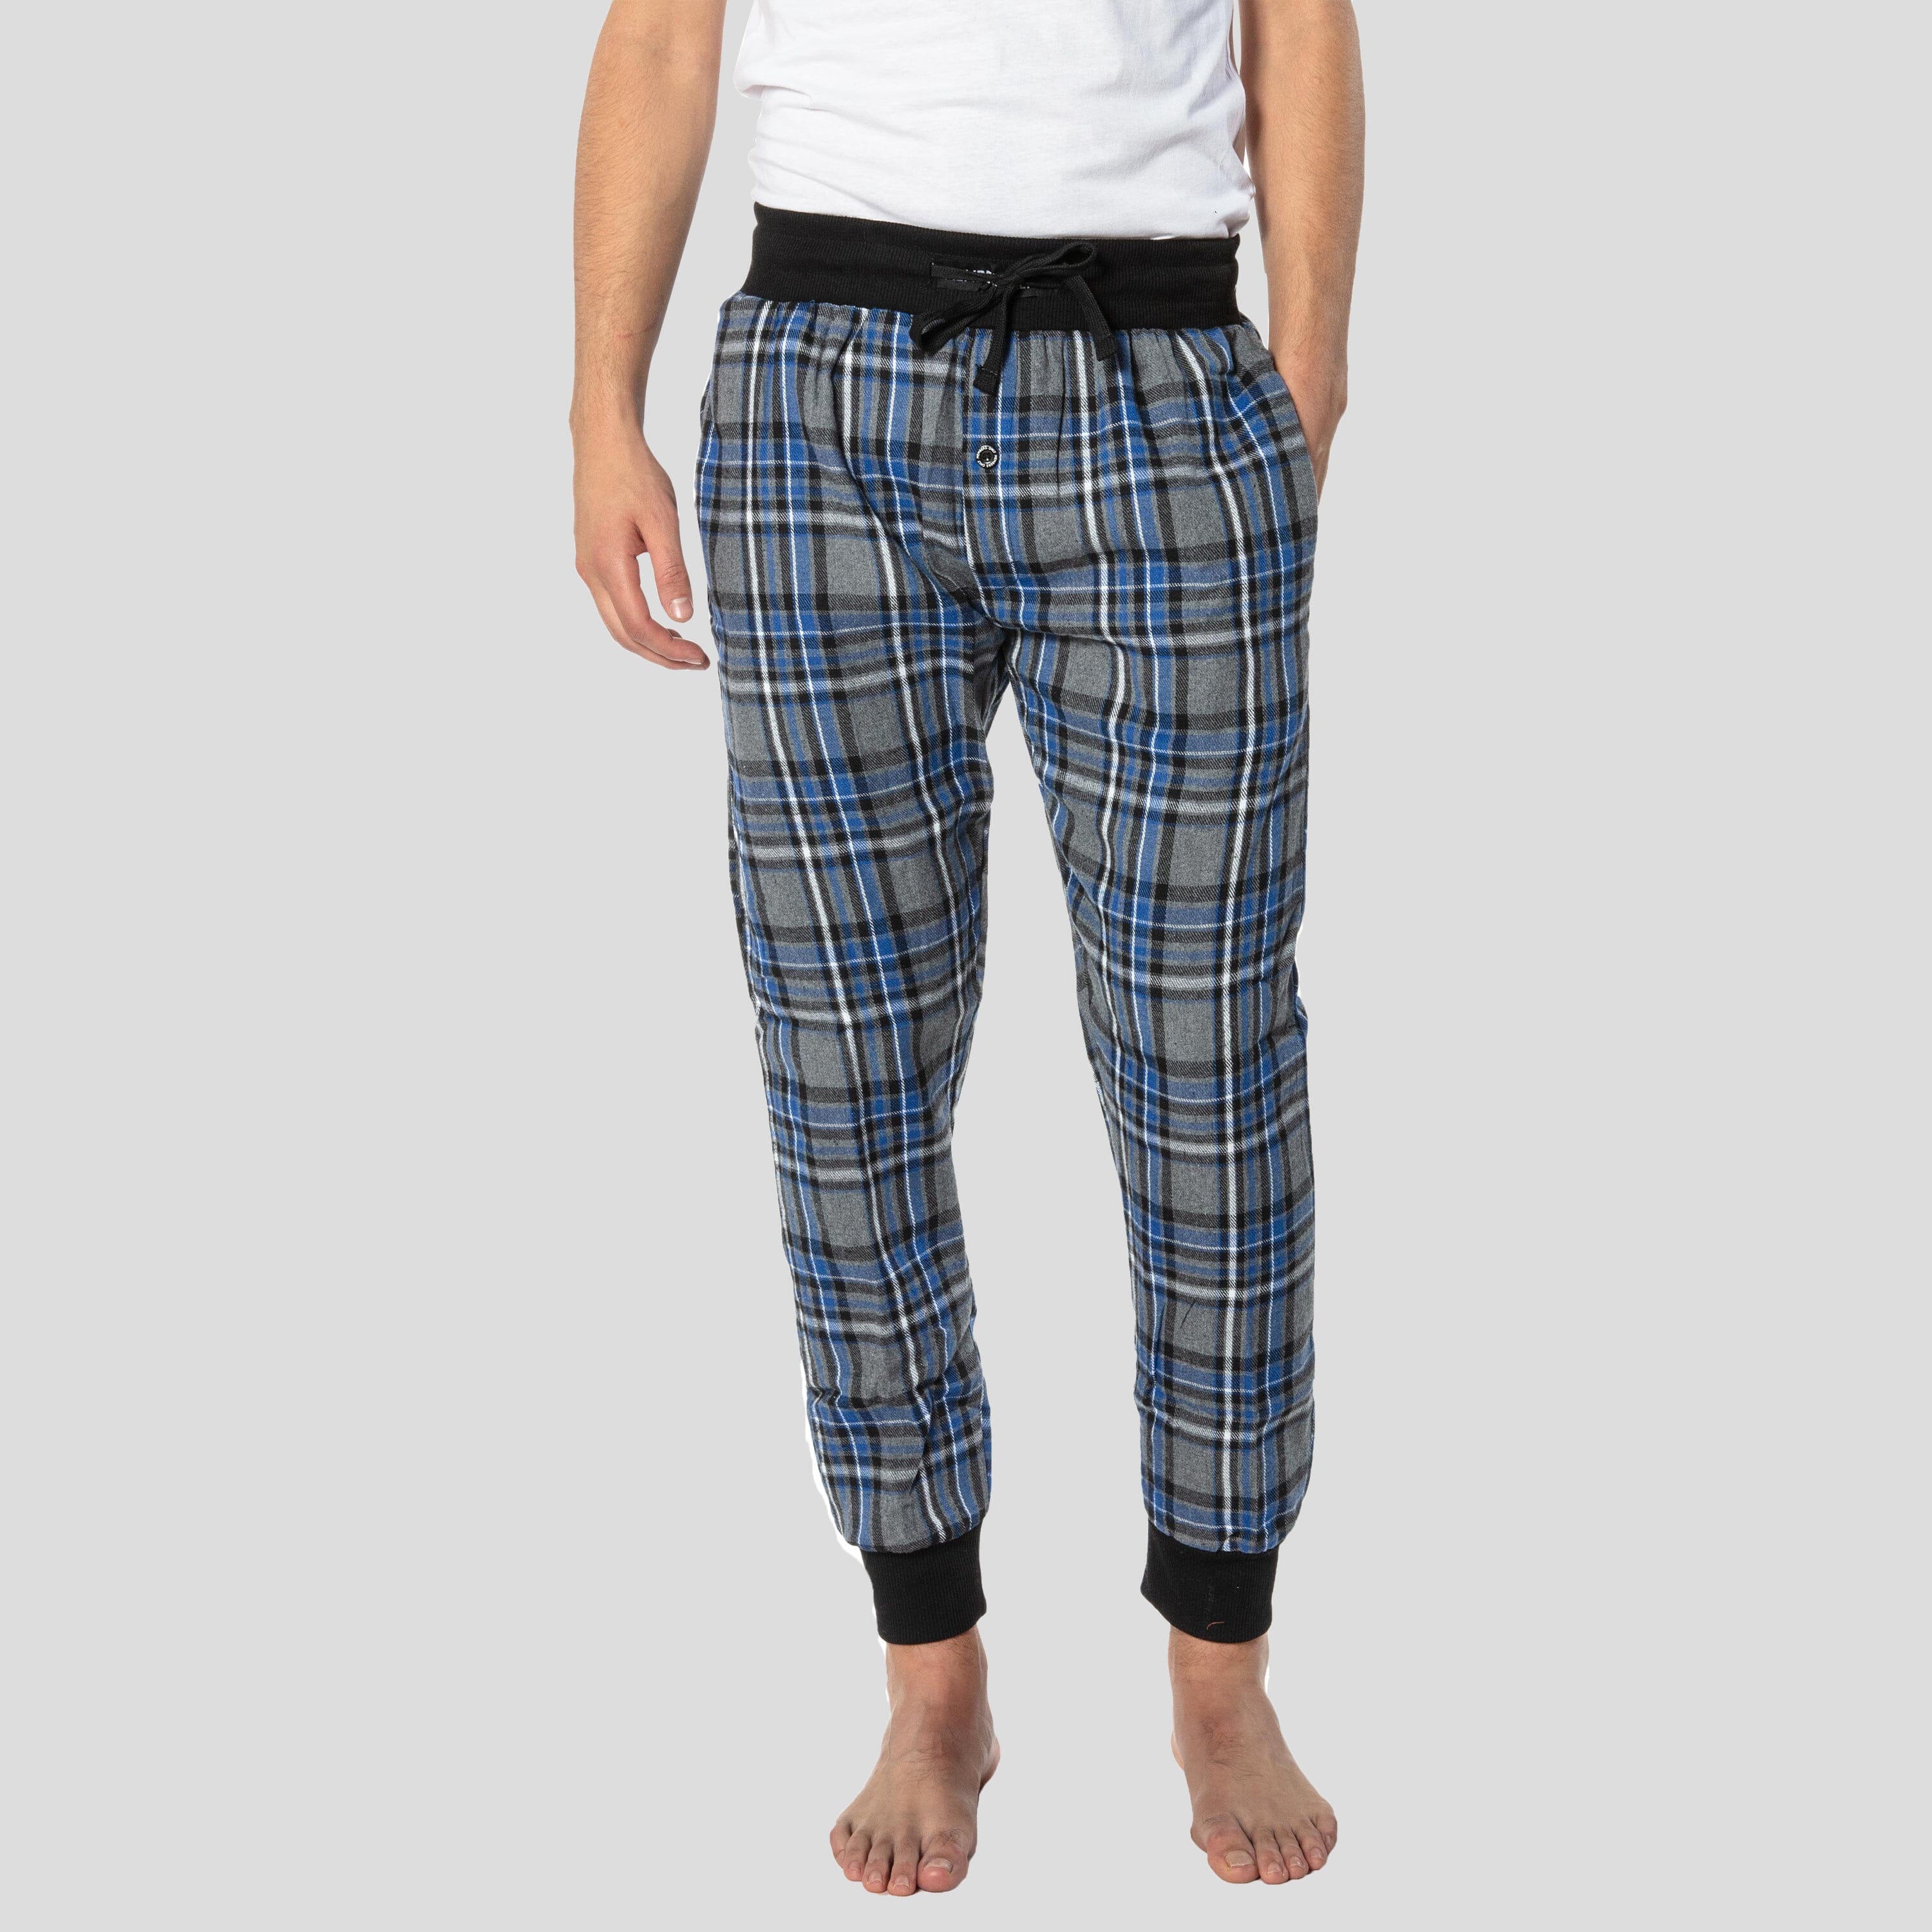 Men's Flannel Jogger Lounge Pants - Charcoal/Blue Men's Sleep Pant Members Only 